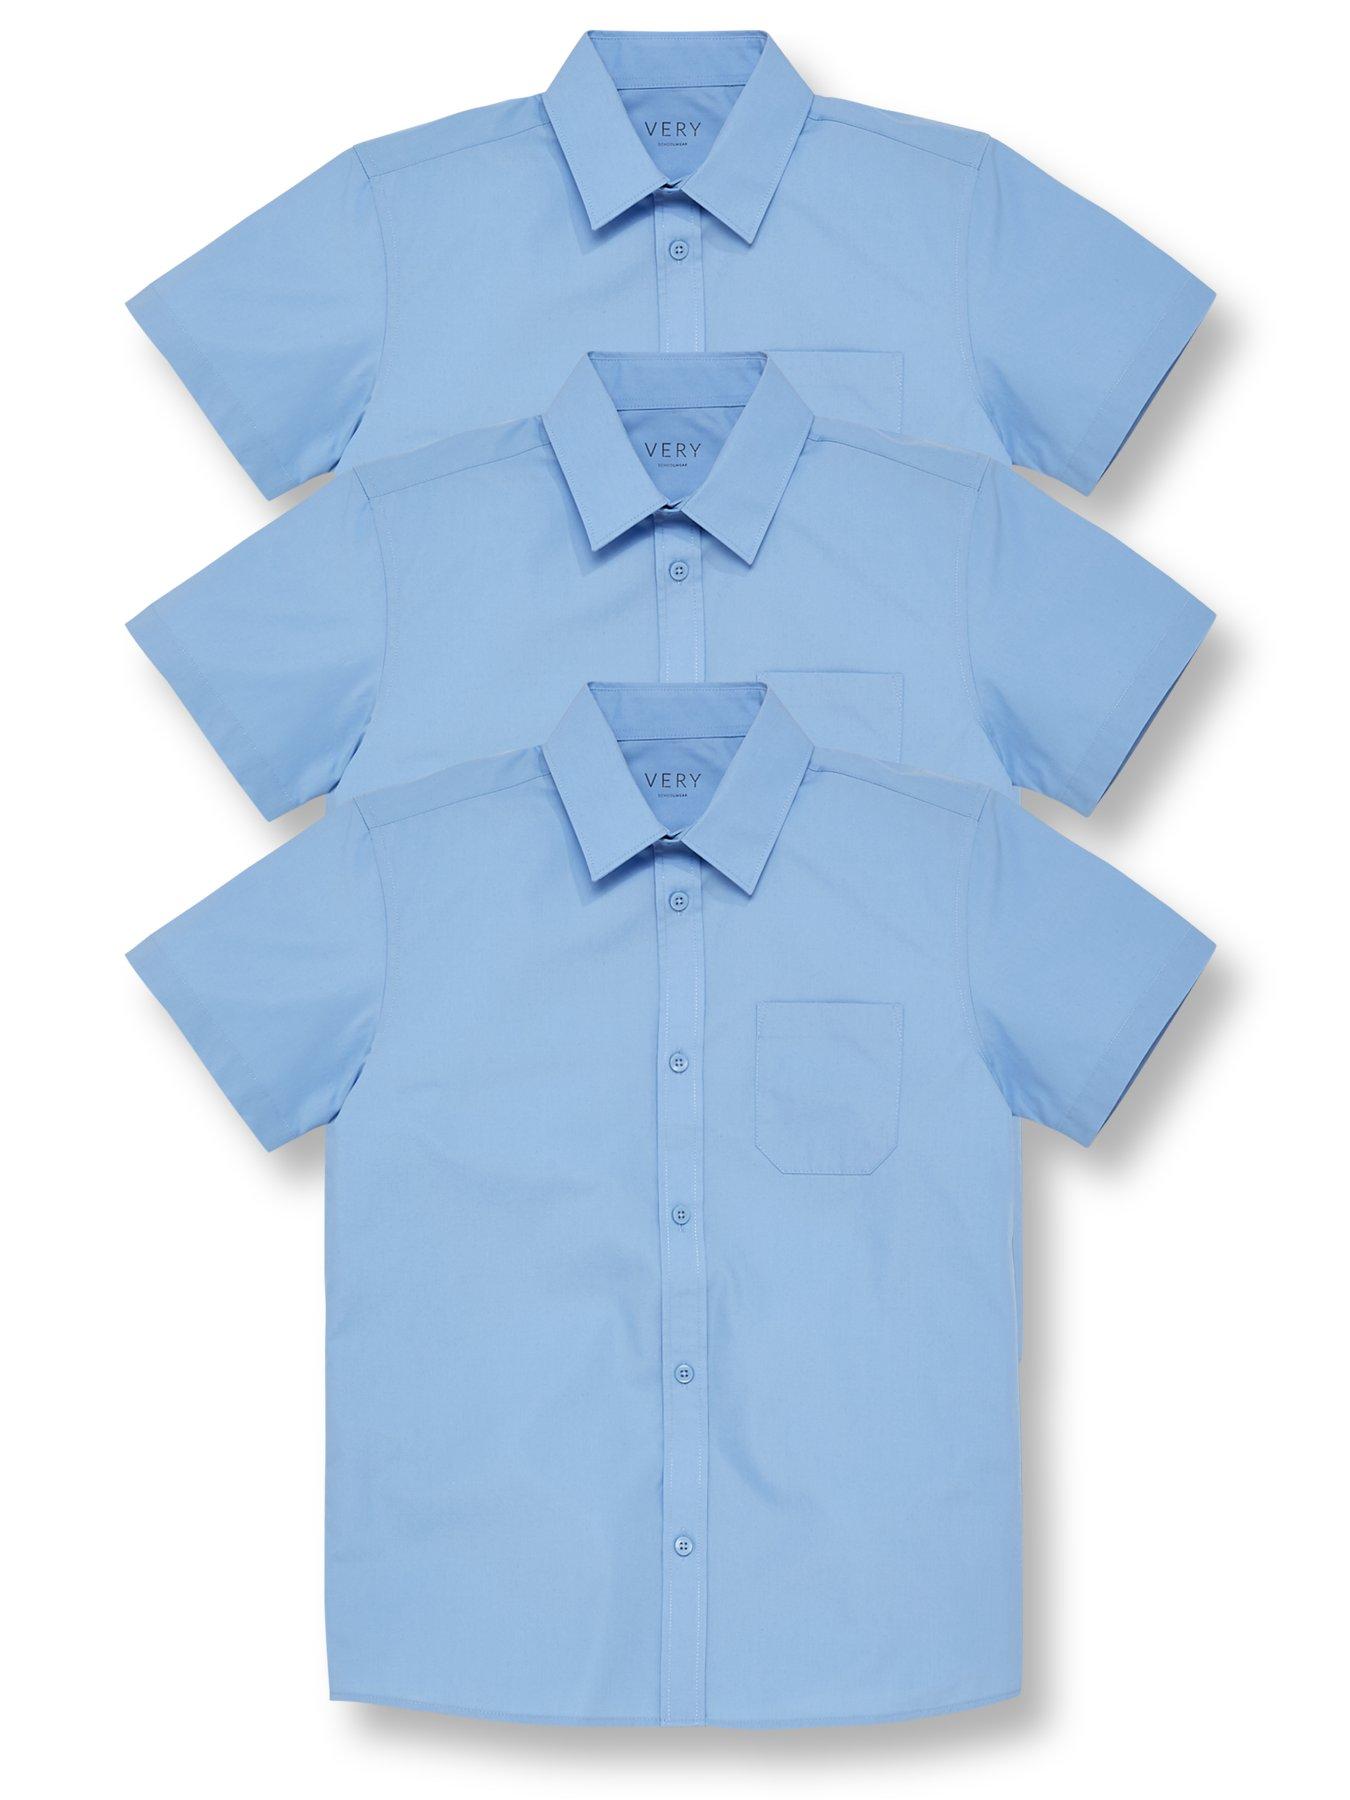 Brand New Top Class Pack of 3 Blue Boys Short Sleeve School Shirts 5-6yrs 